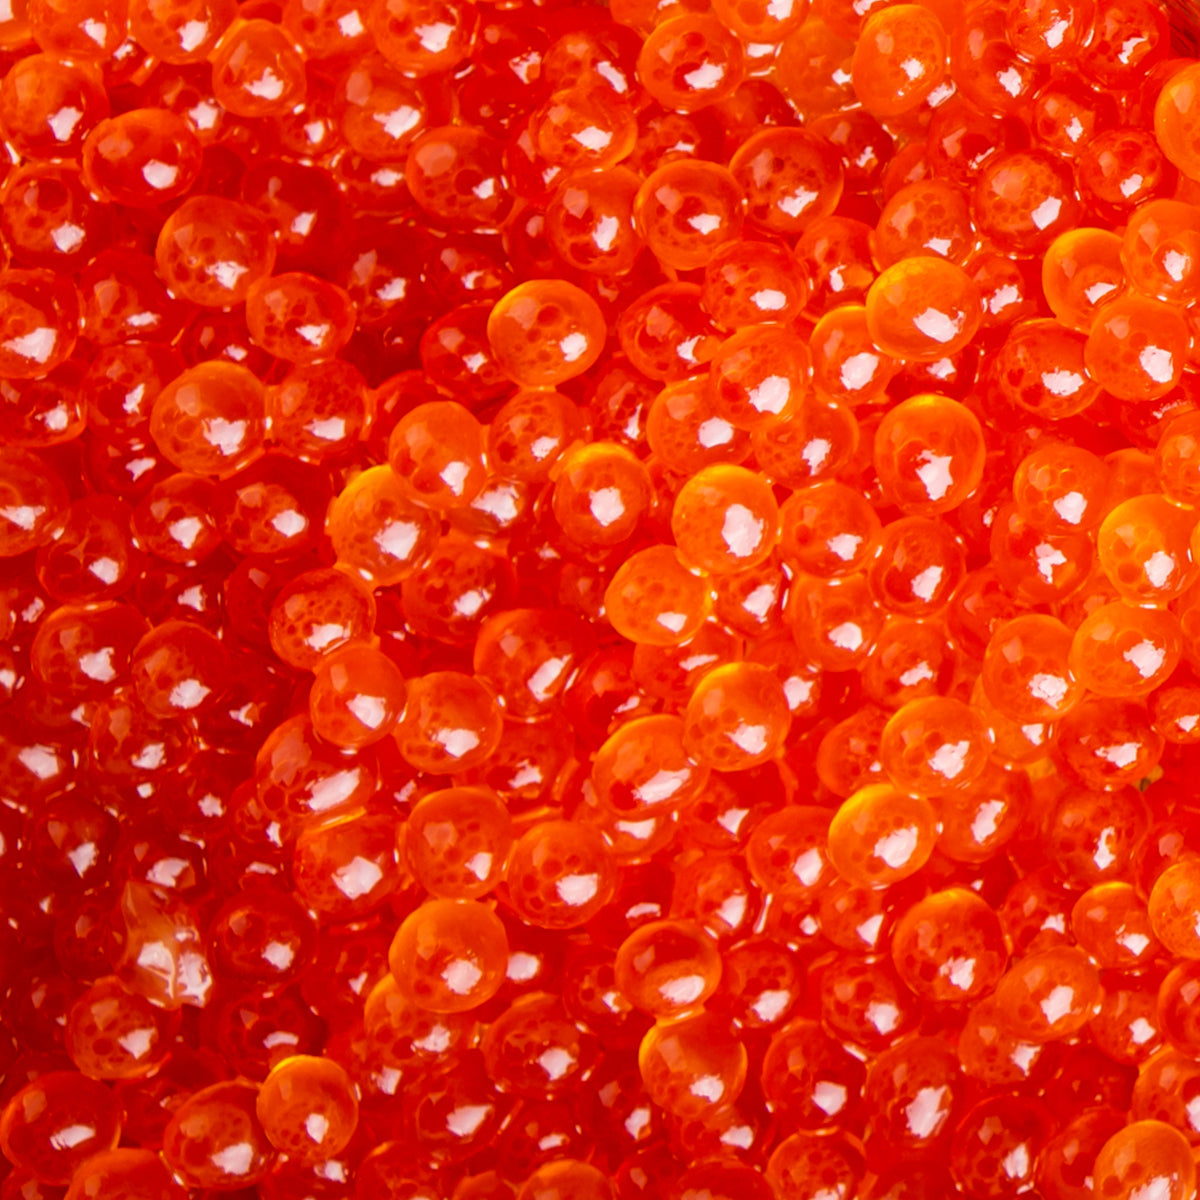 Red Caviar